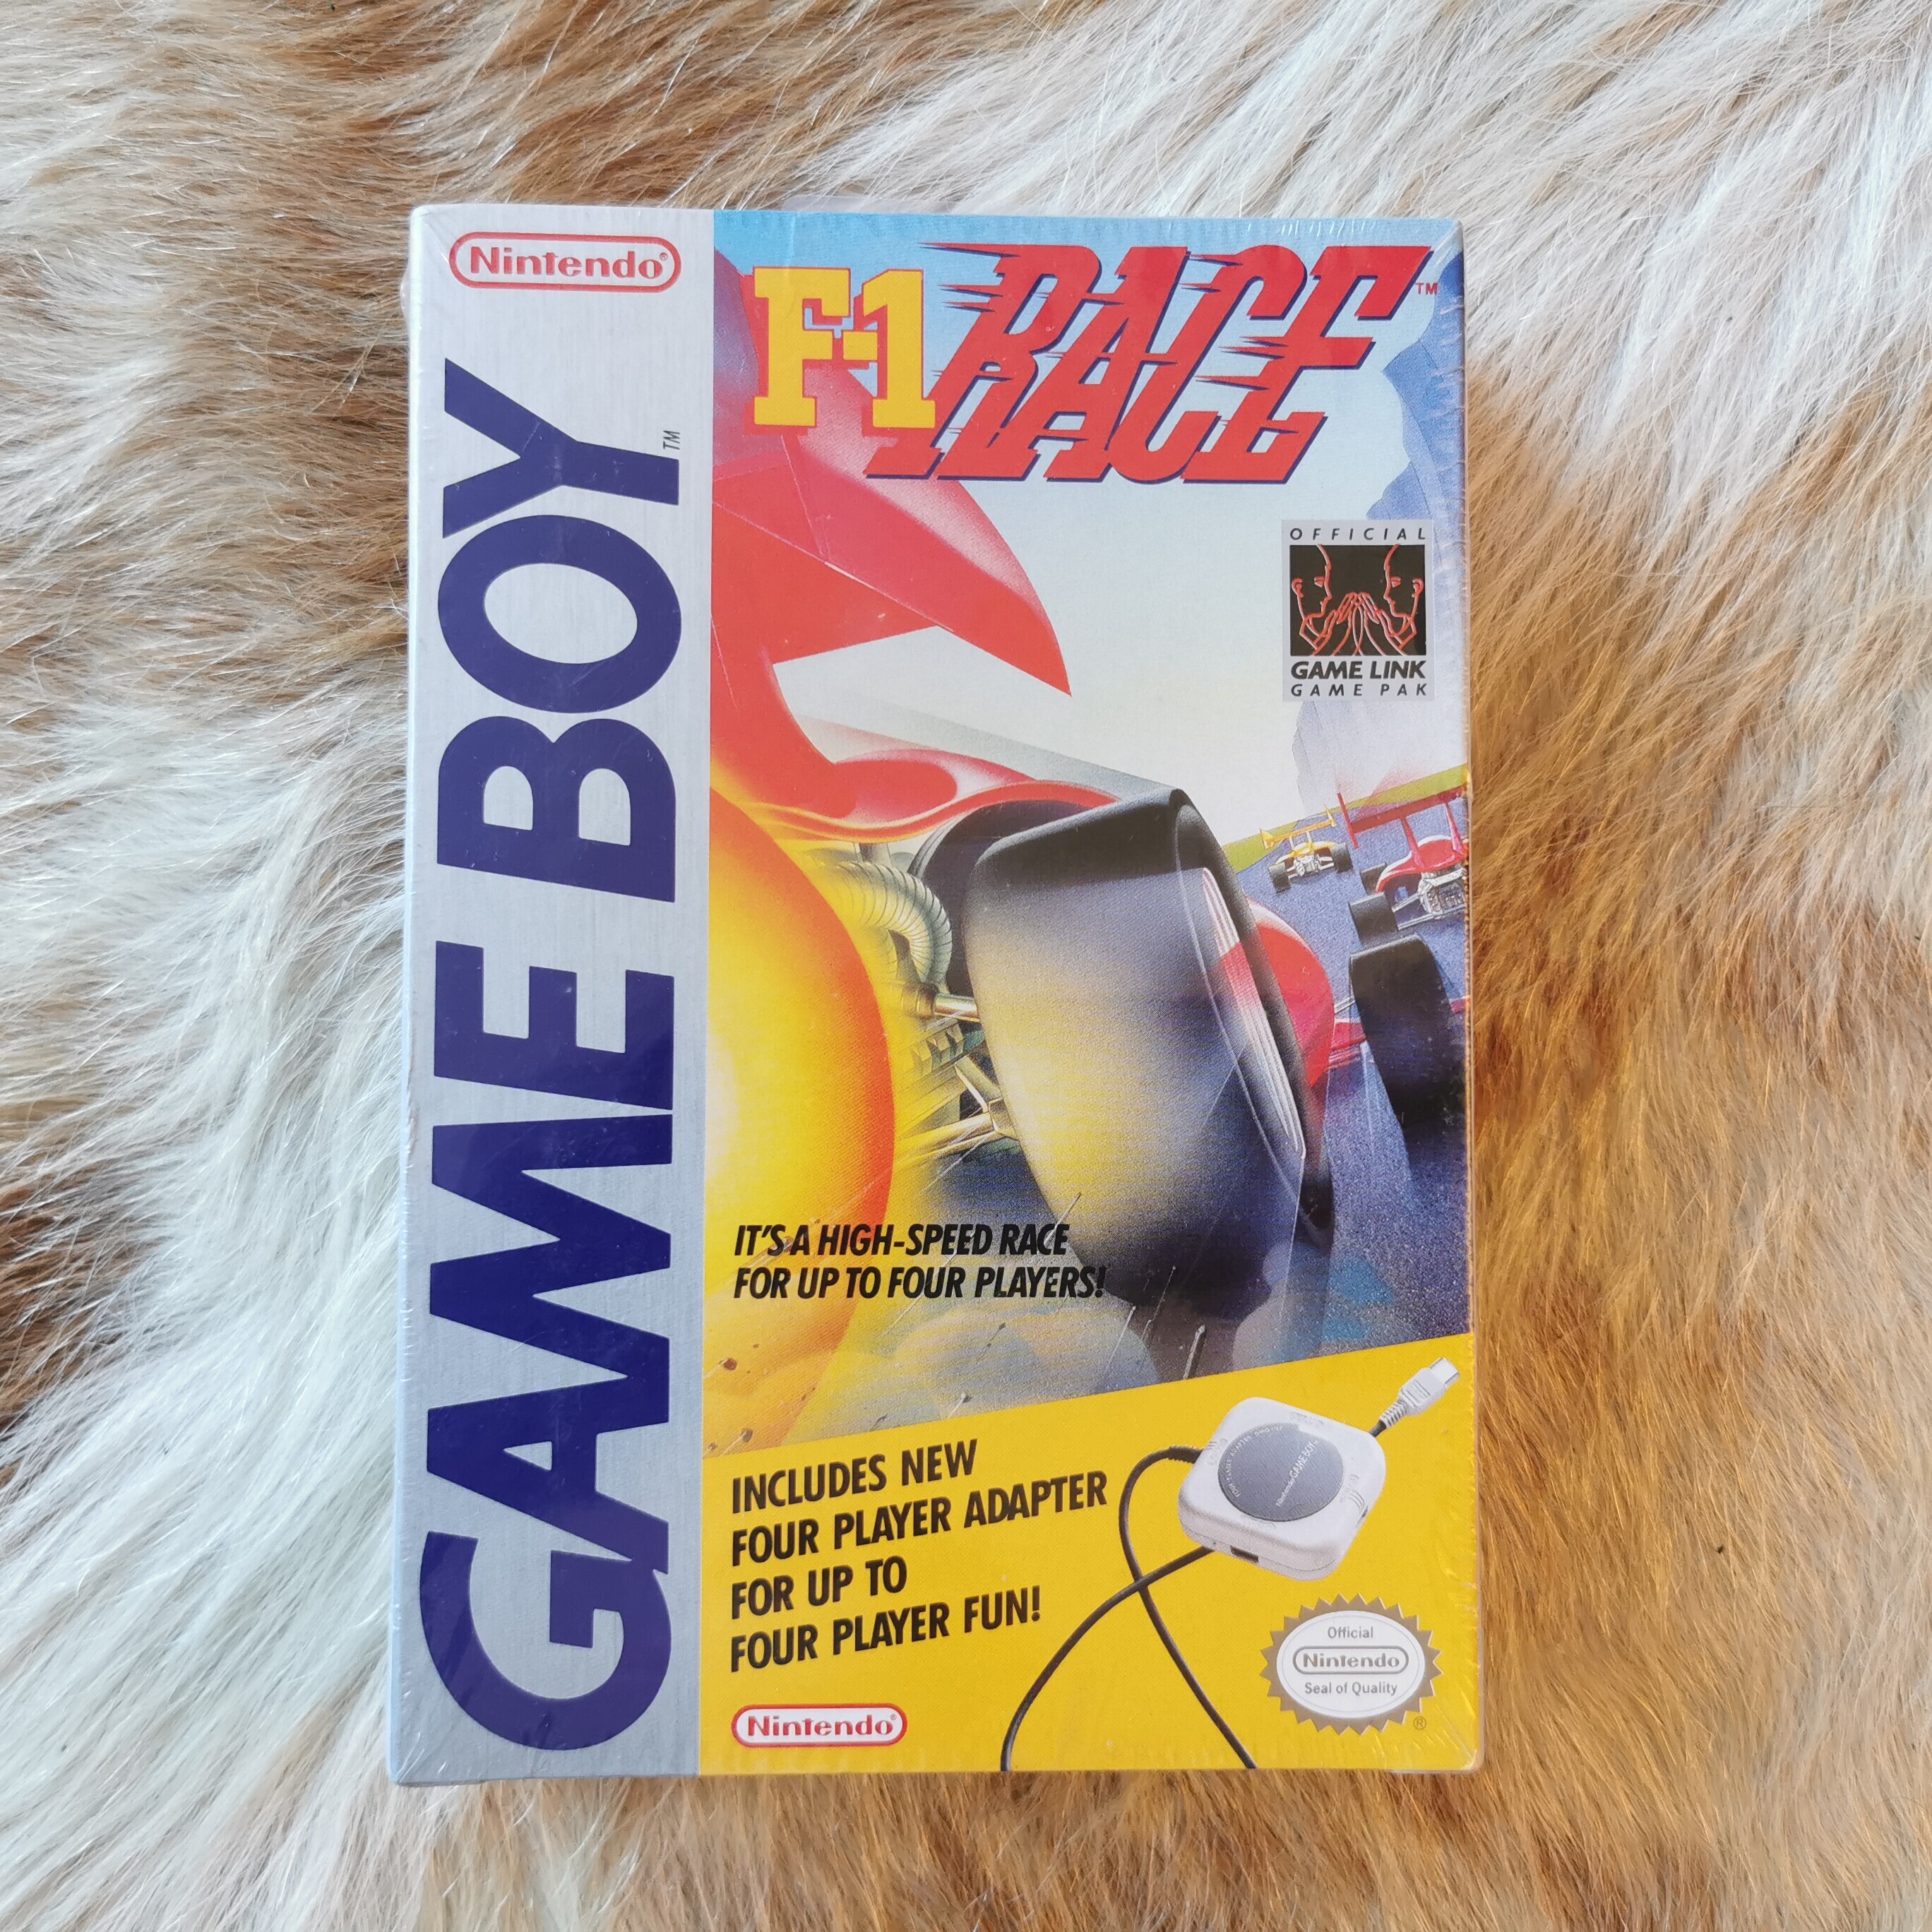  Nintendo Game Boy 4-Player Adapter + F1 Race™ Bundle [NA]